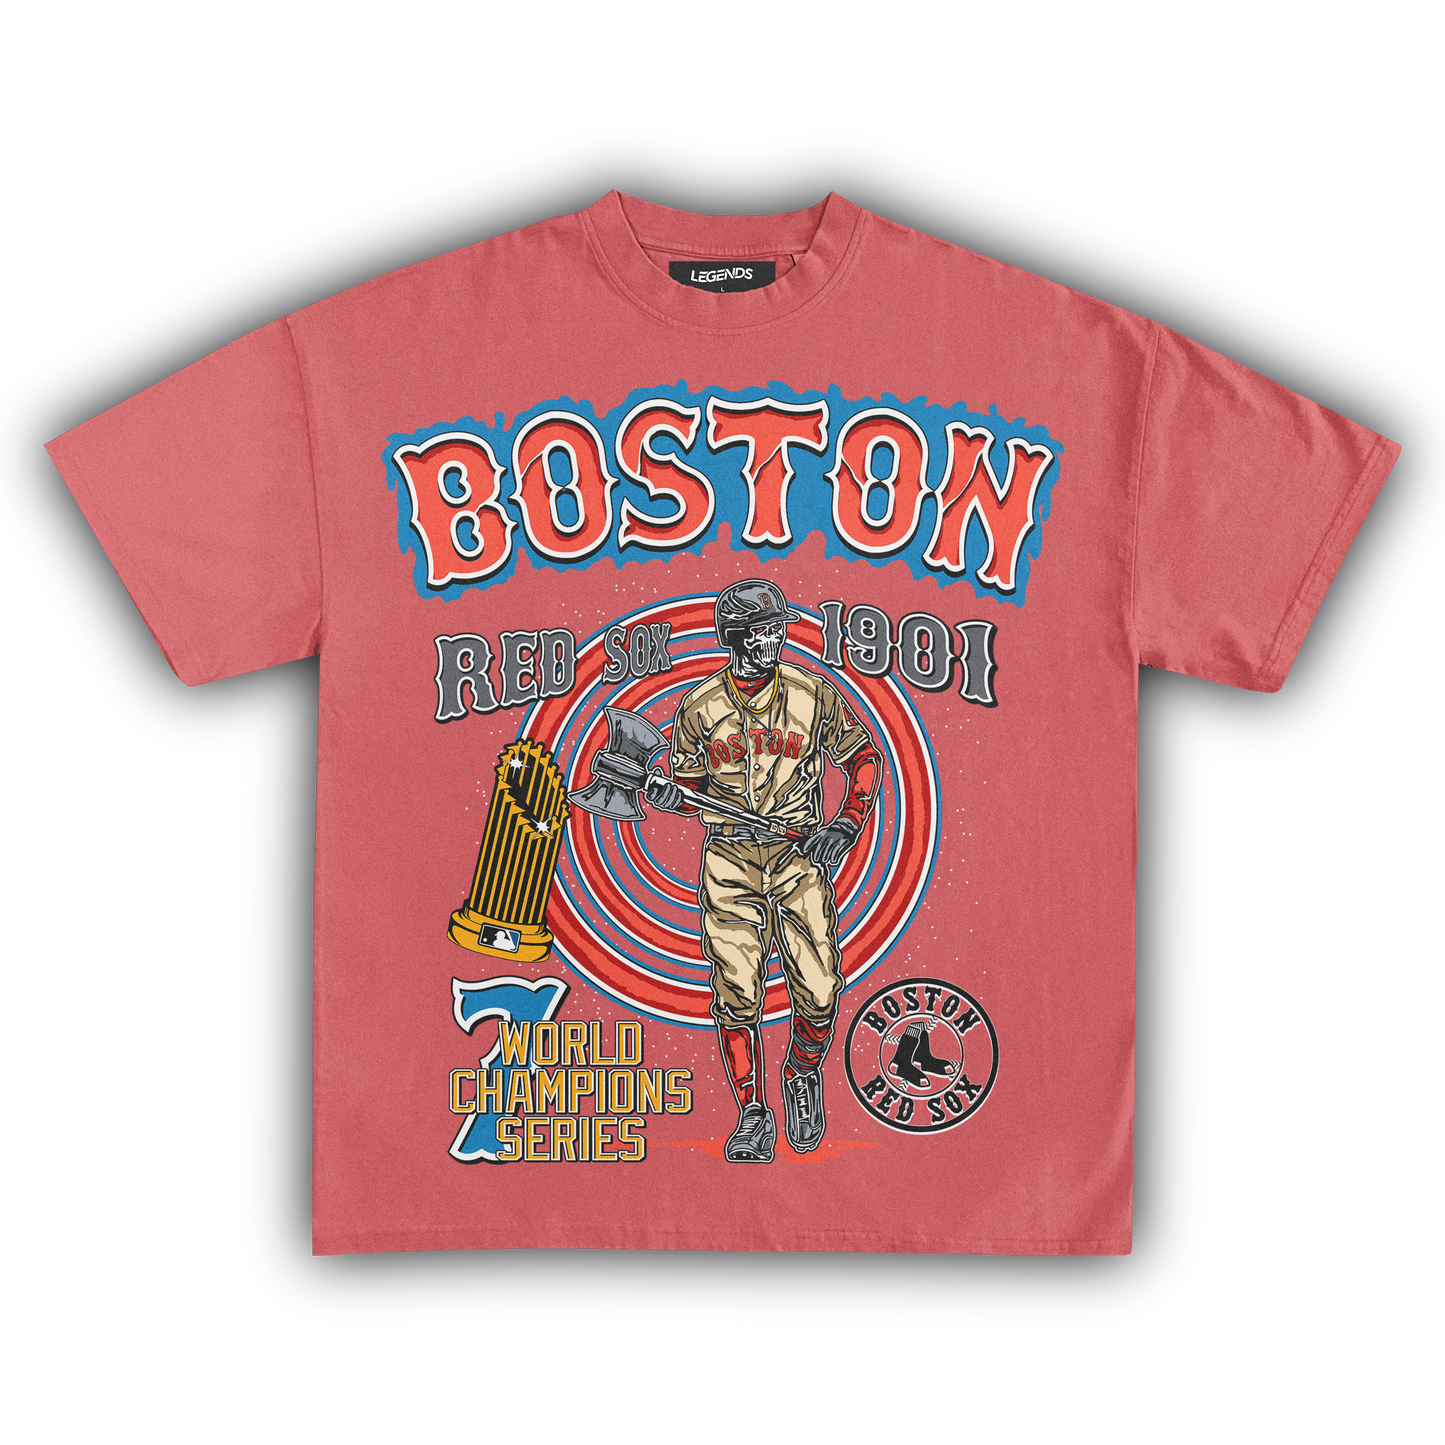 BOSTON RED SOX 1901 TEE